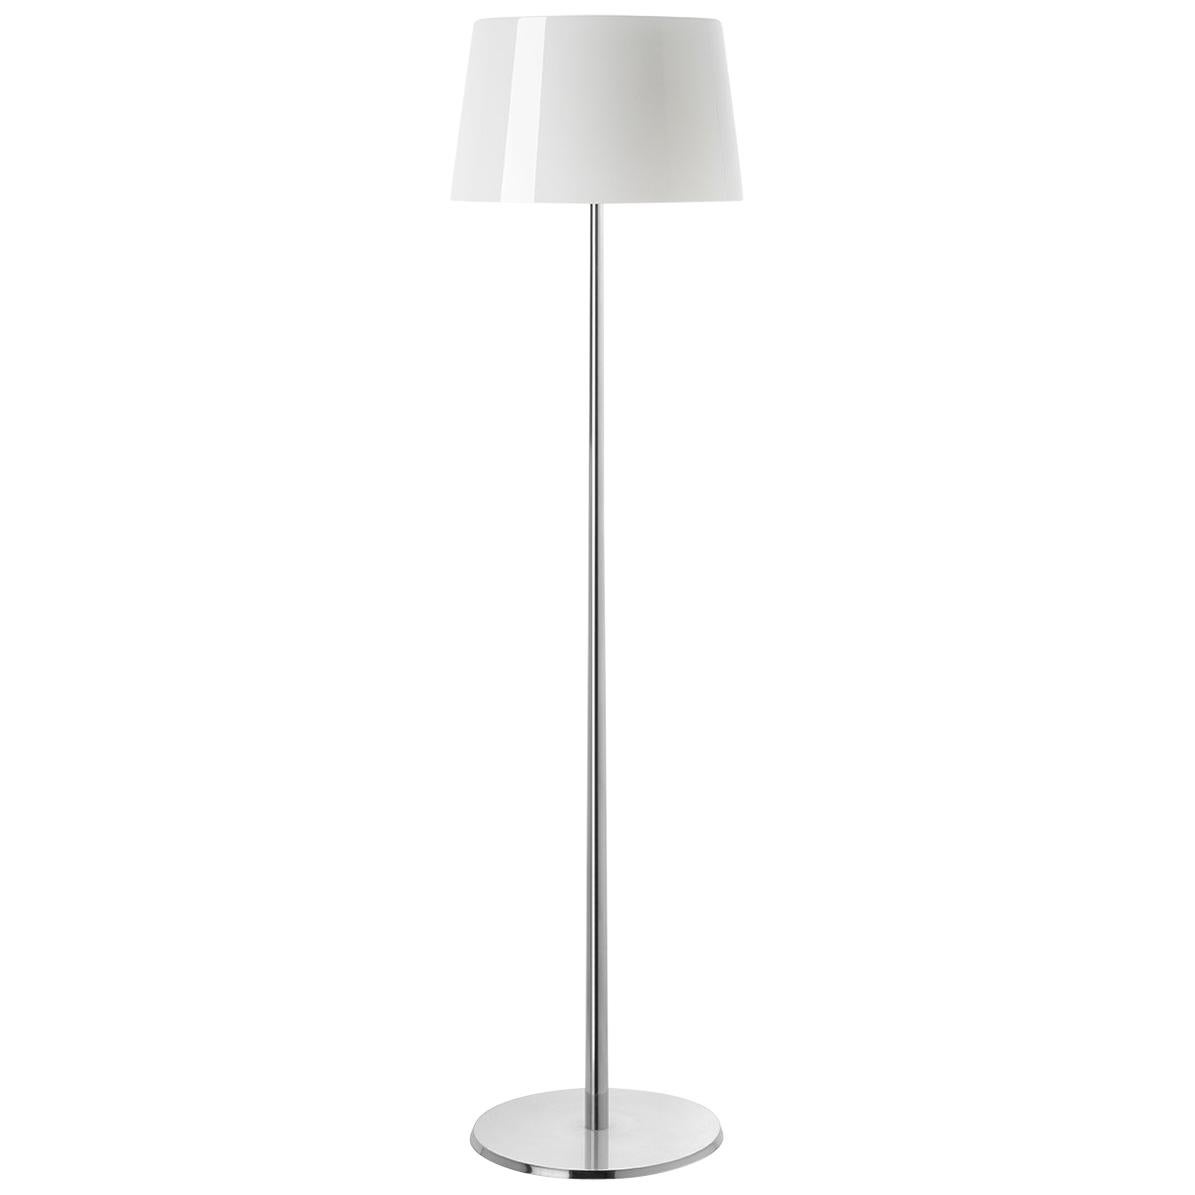 Foscarini Lumiere Extra Large Floor Lamp in White & Aluminum by Rodolfo Dordoni For Sale